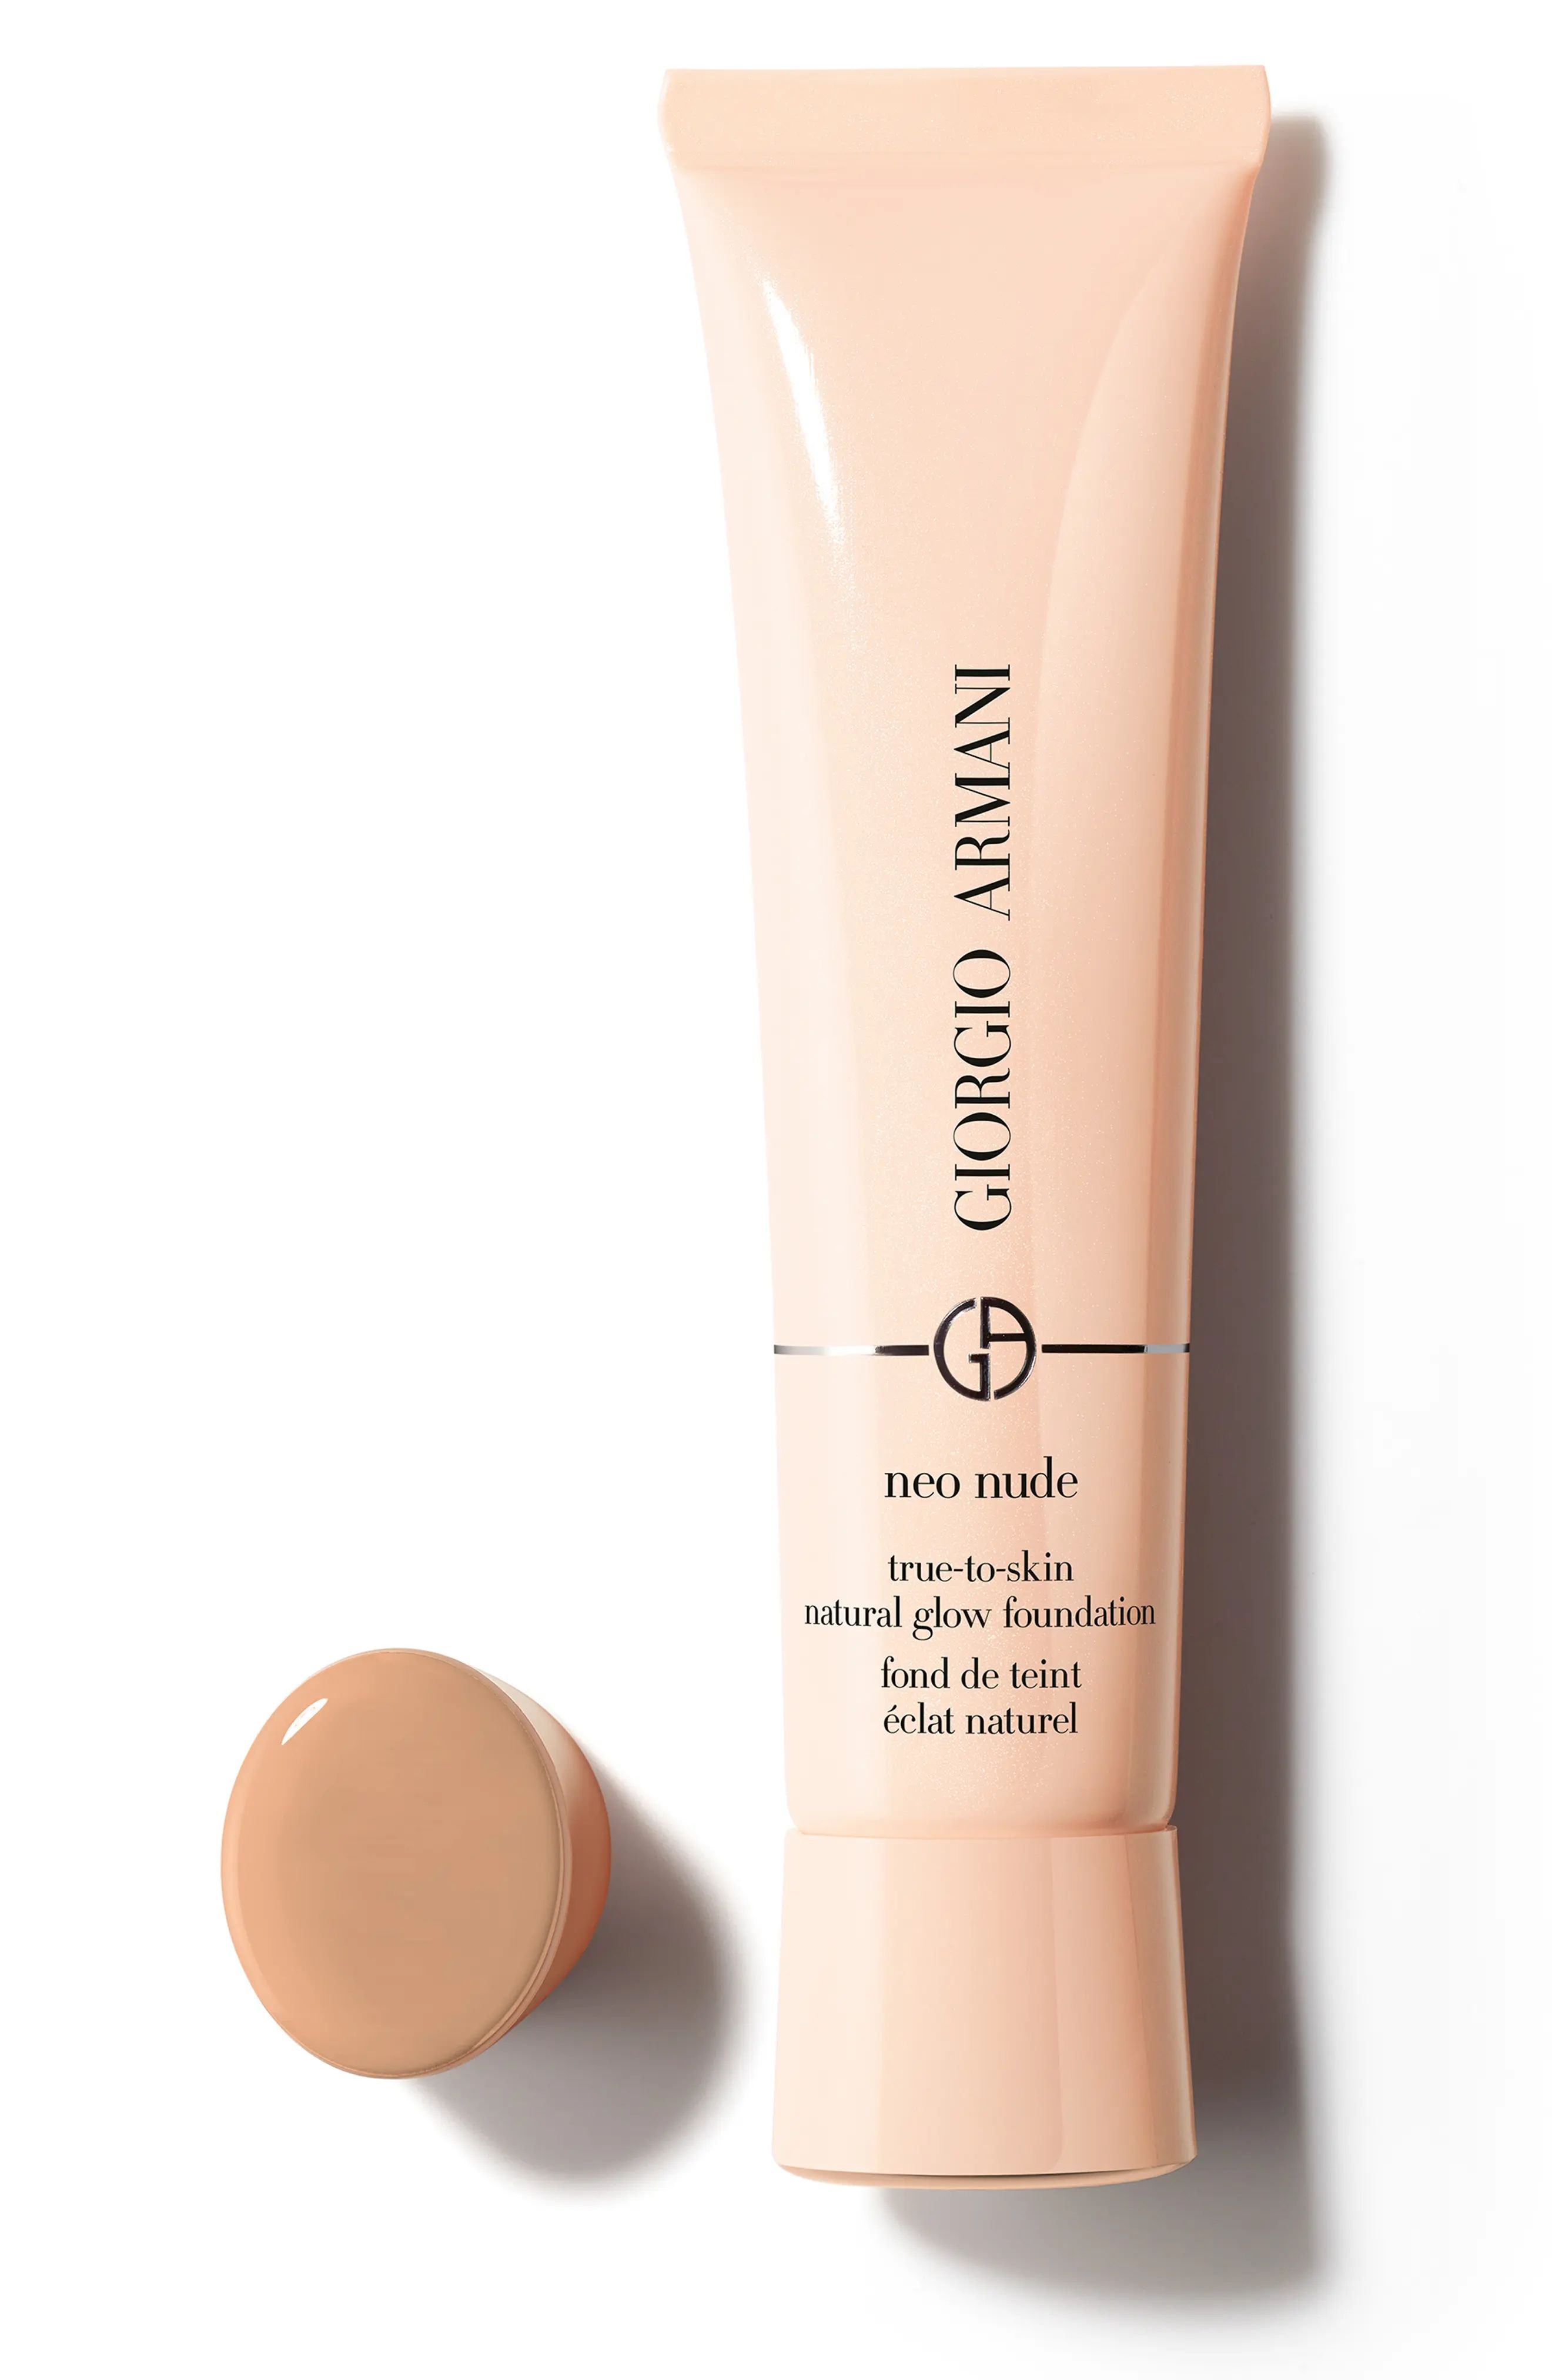 Giorgio Armani Neo Nude True-To-Skin Natural Glow Foundation in 04.5 - Light/neutral Undertone at No | Nordstrom